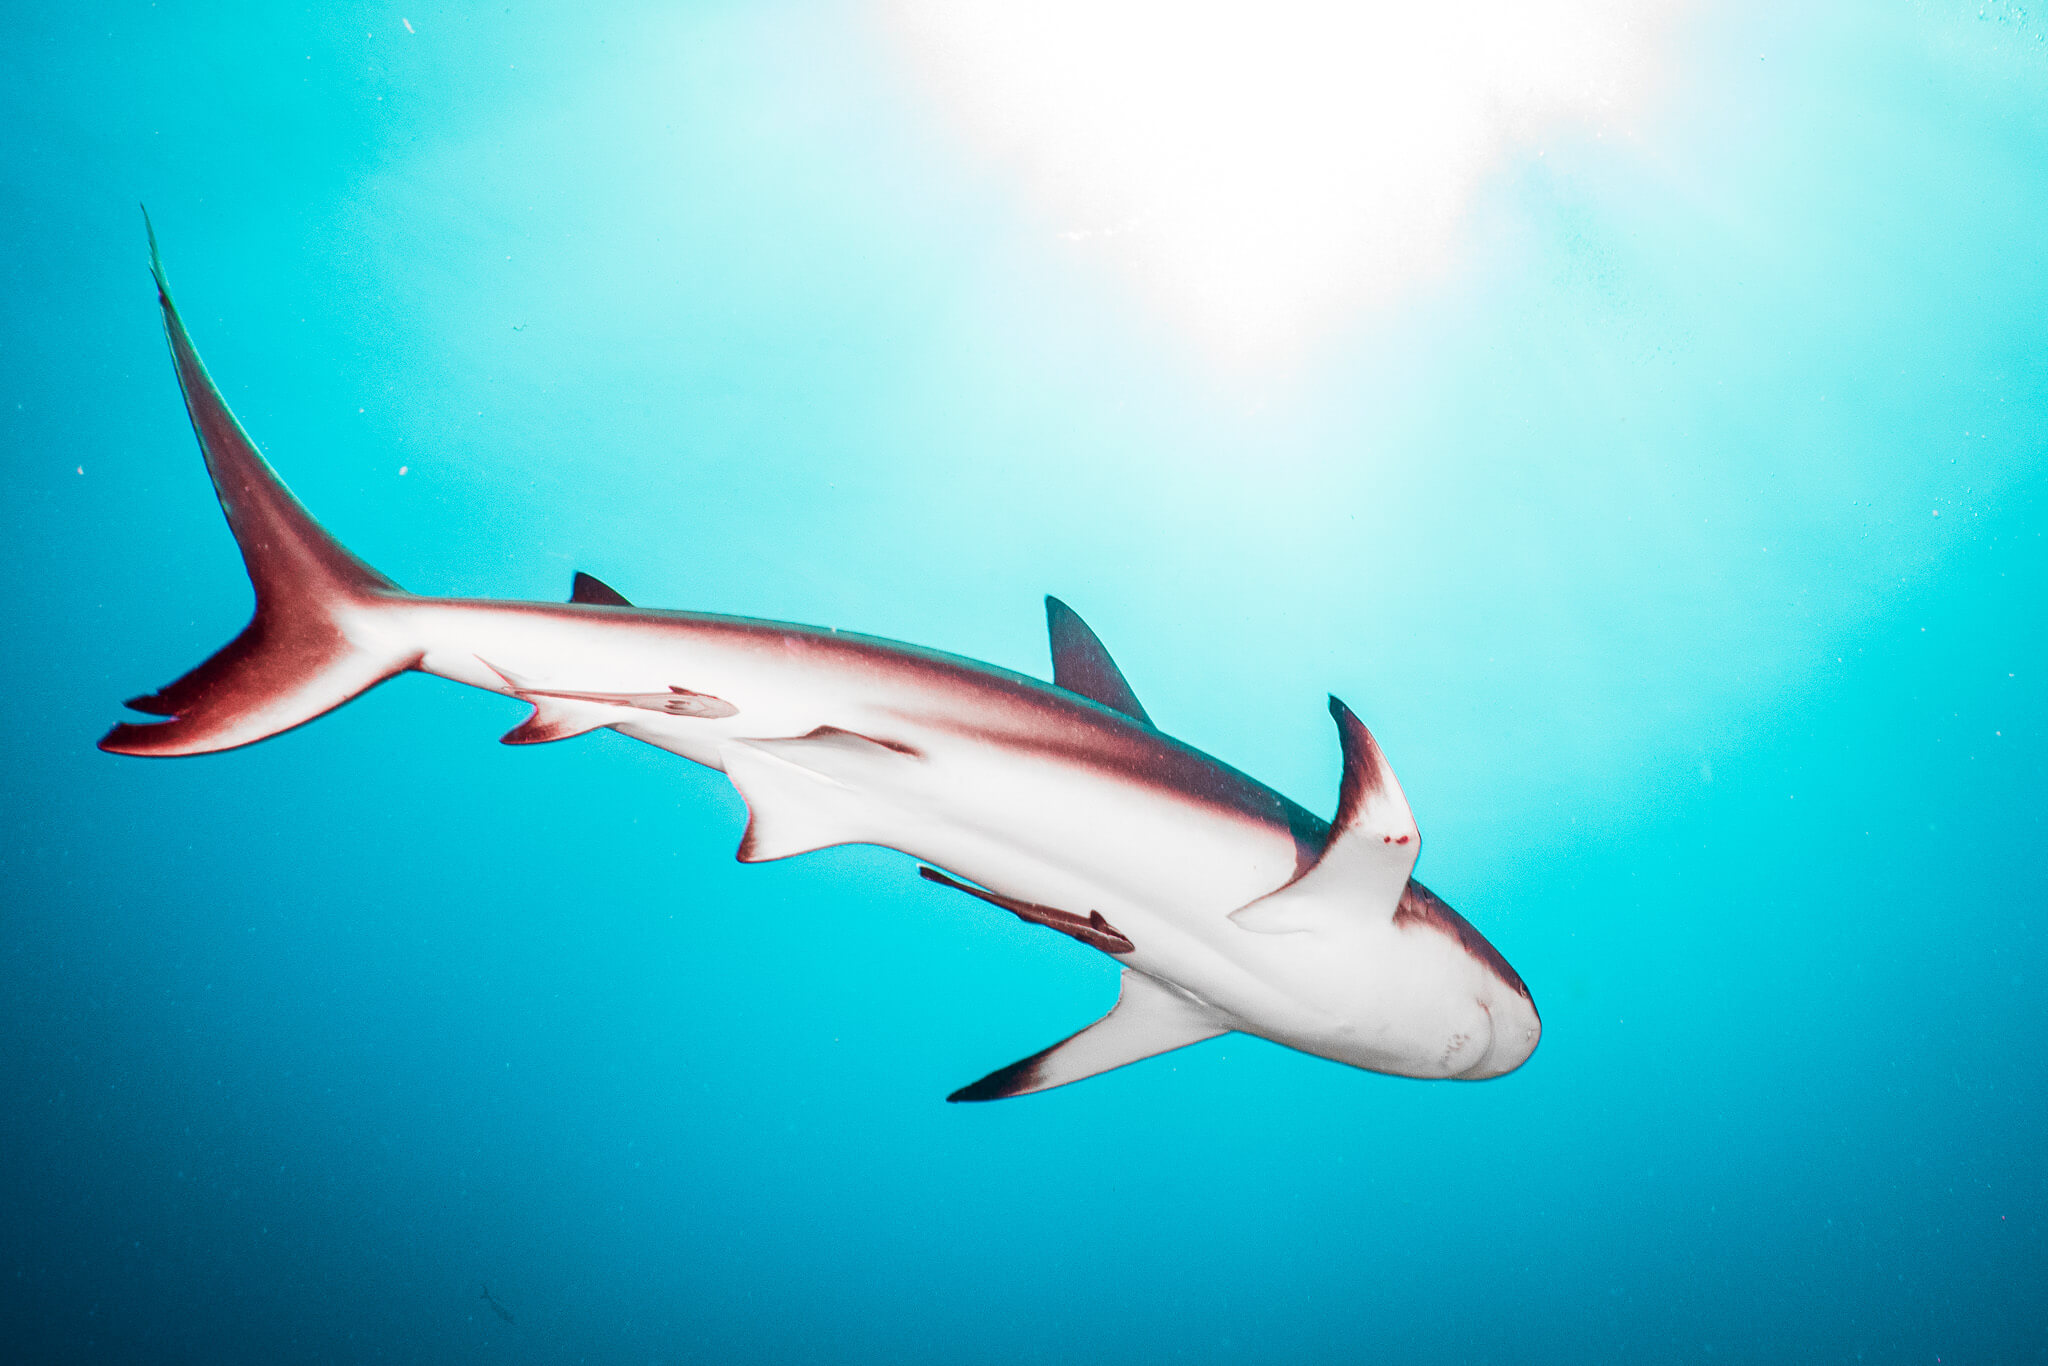 Caribbean reef shark with a bent pectoral fin